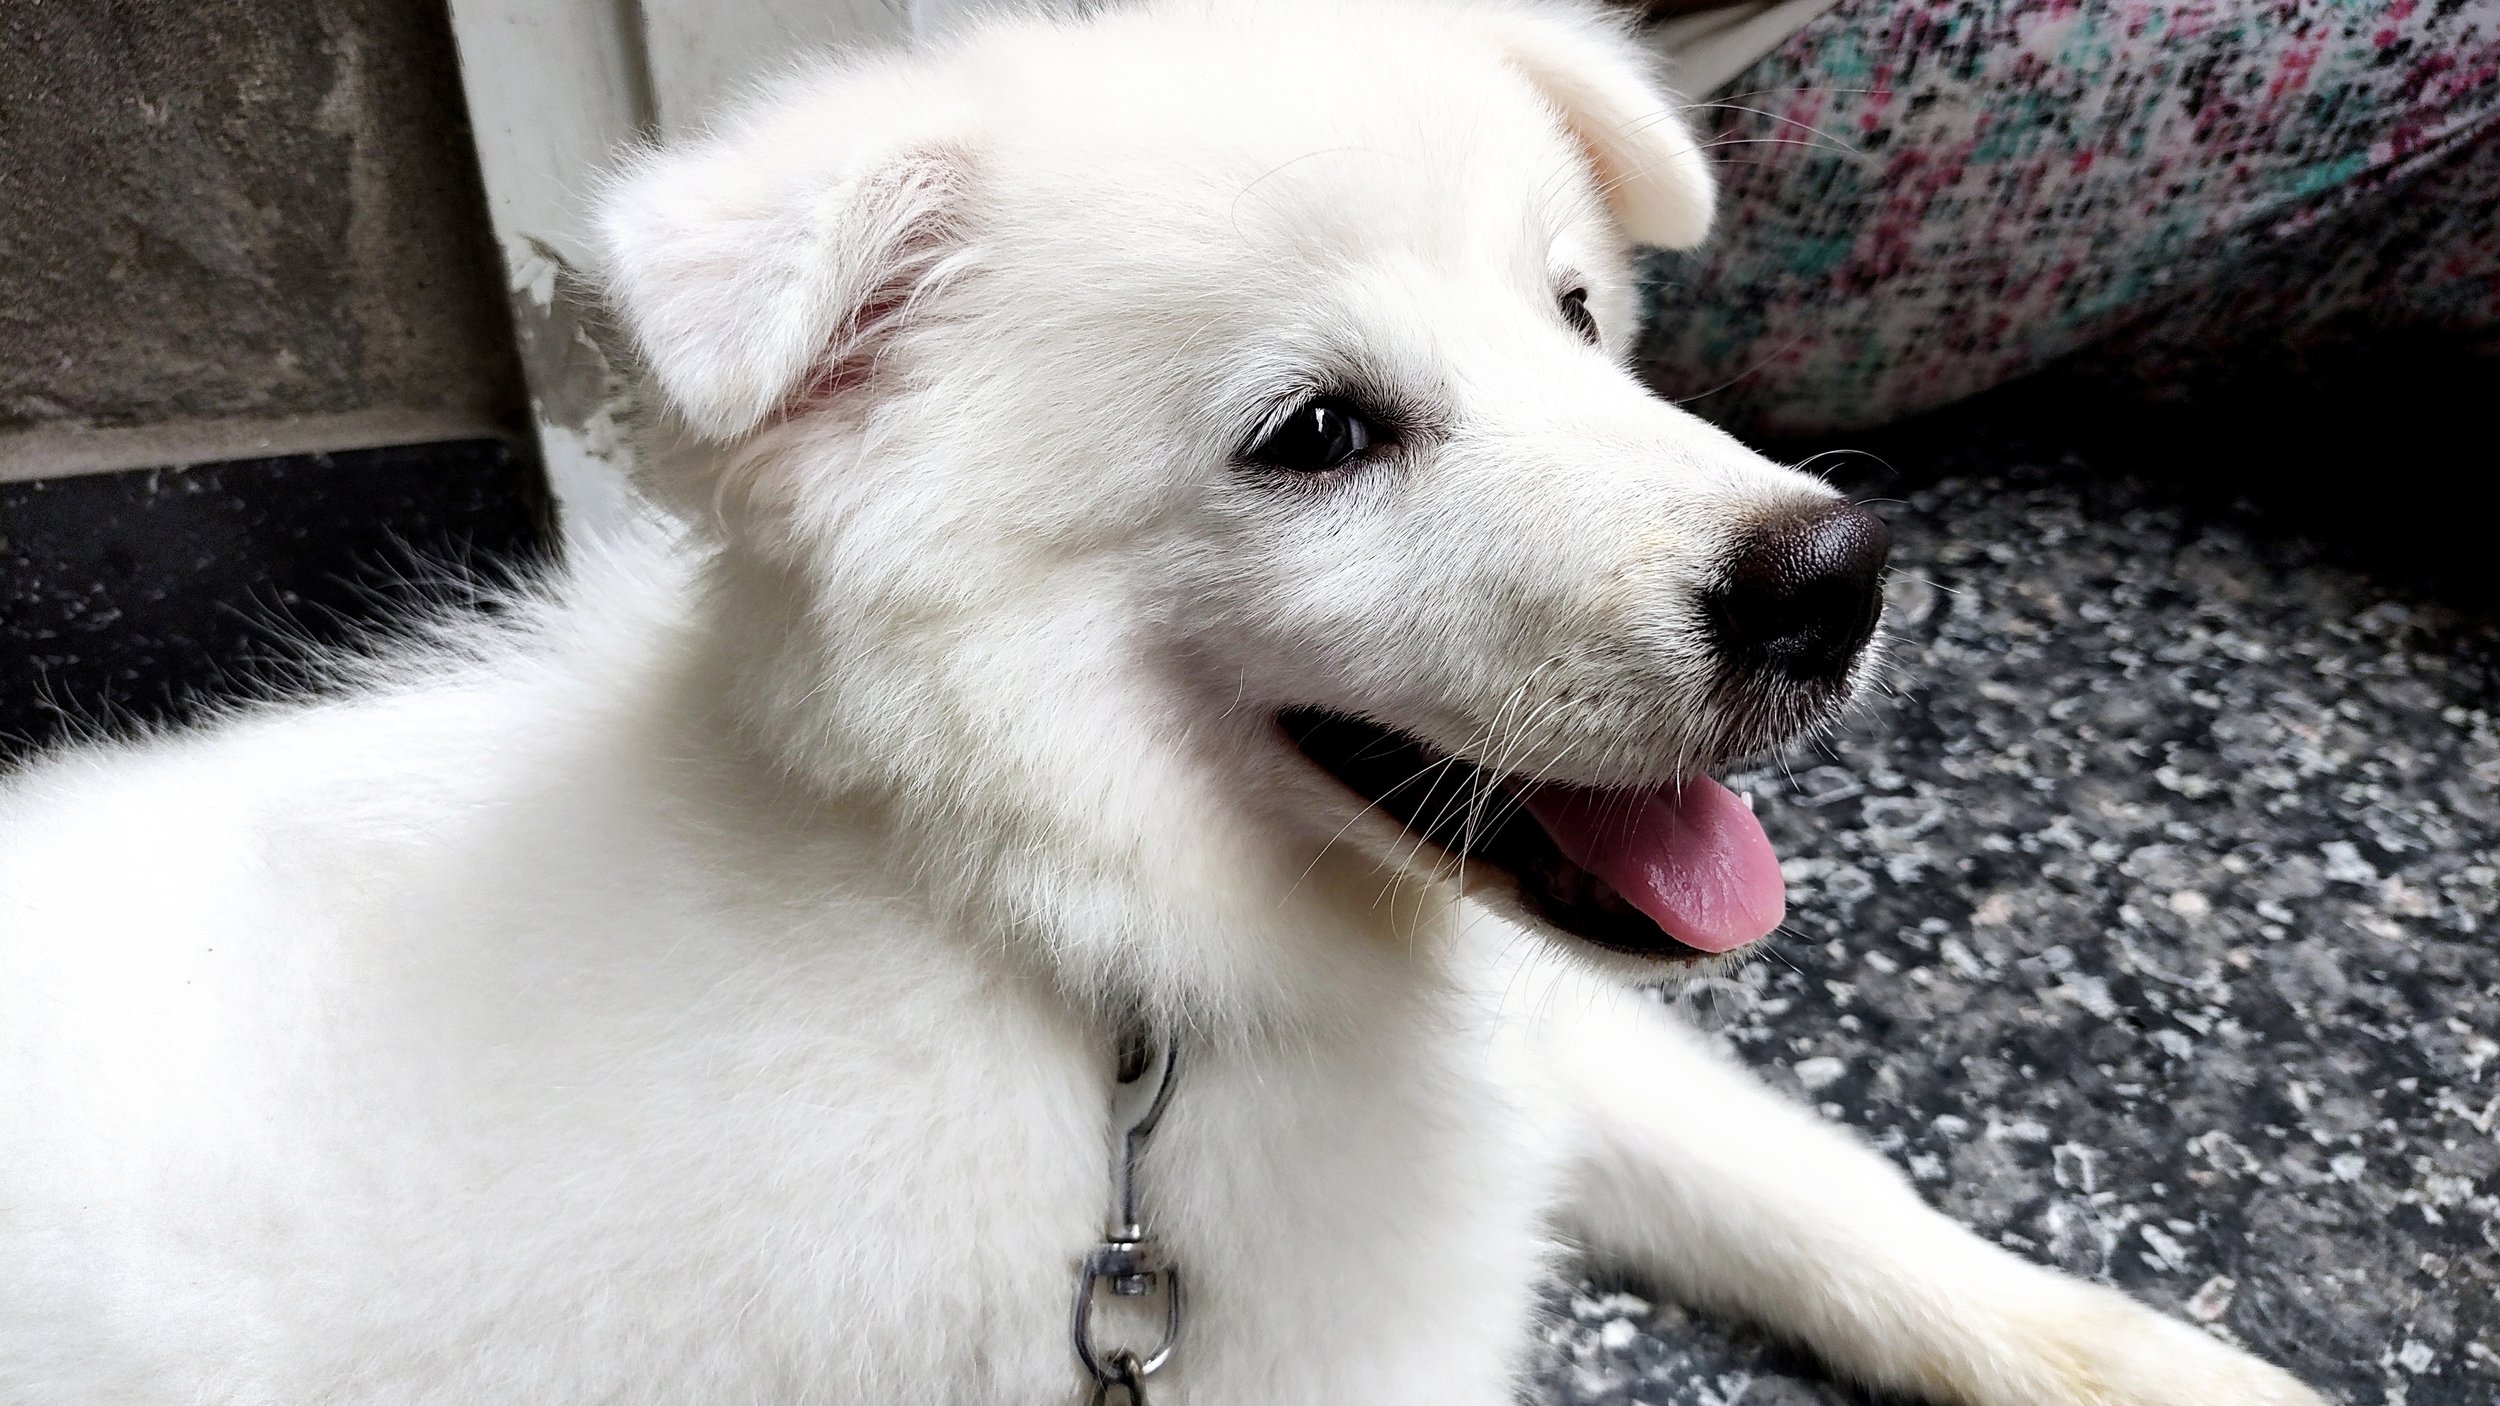 closup-cute-white-puppy-dog-portrait-portrait-maremma-sheepdog-shepherd-dog-maremmano-abruzzese.jpg